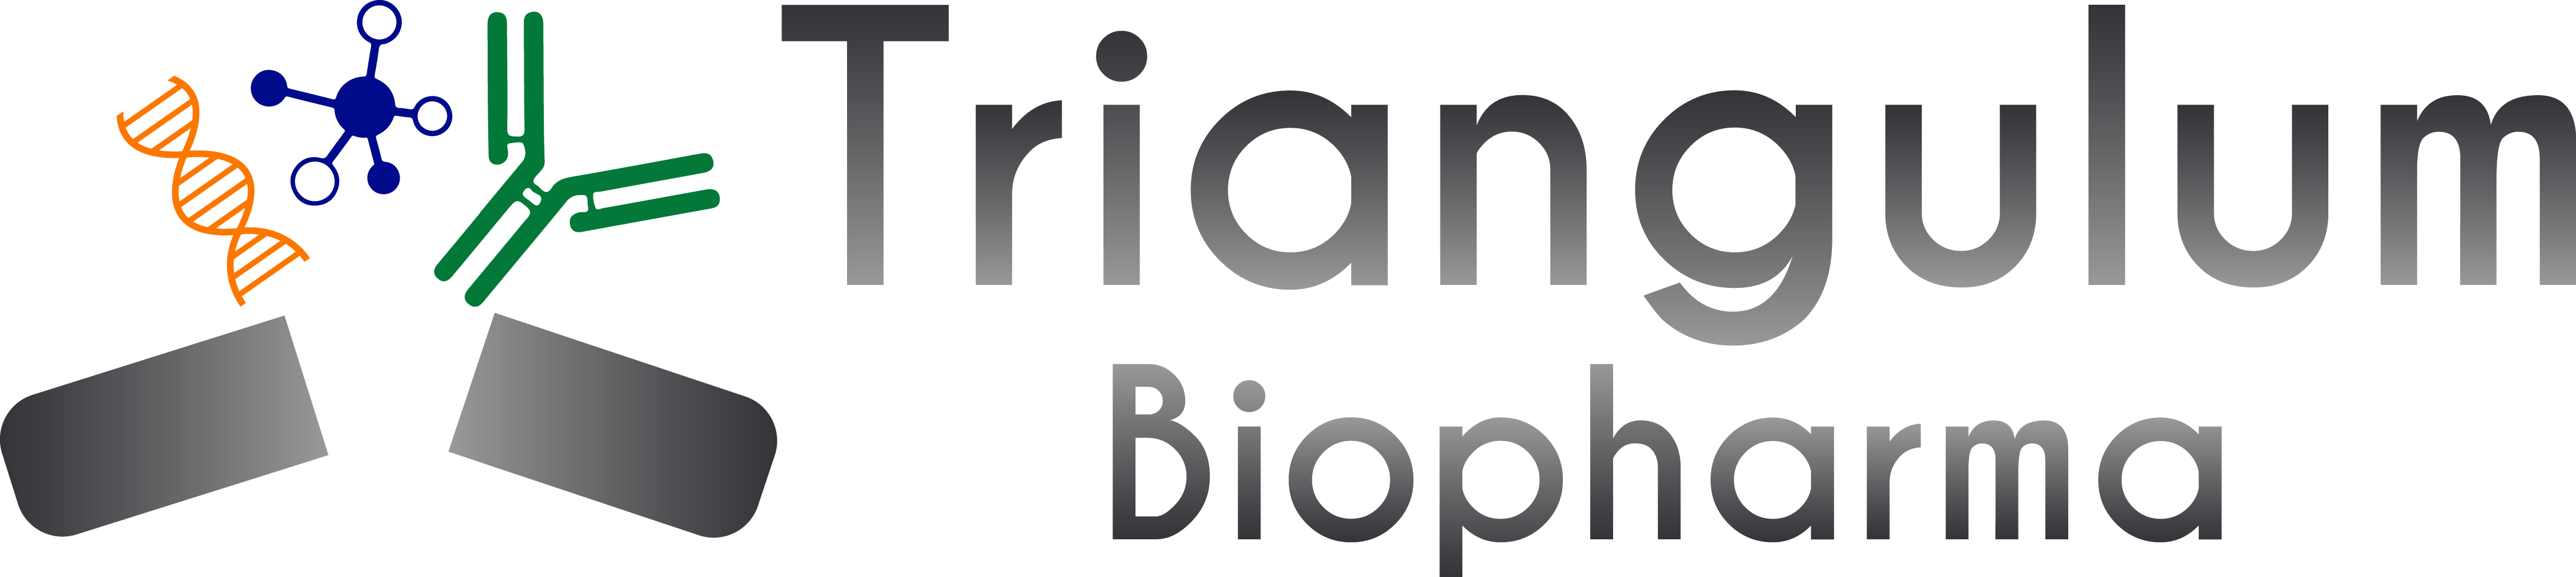 Triangulum Biopharma Logo